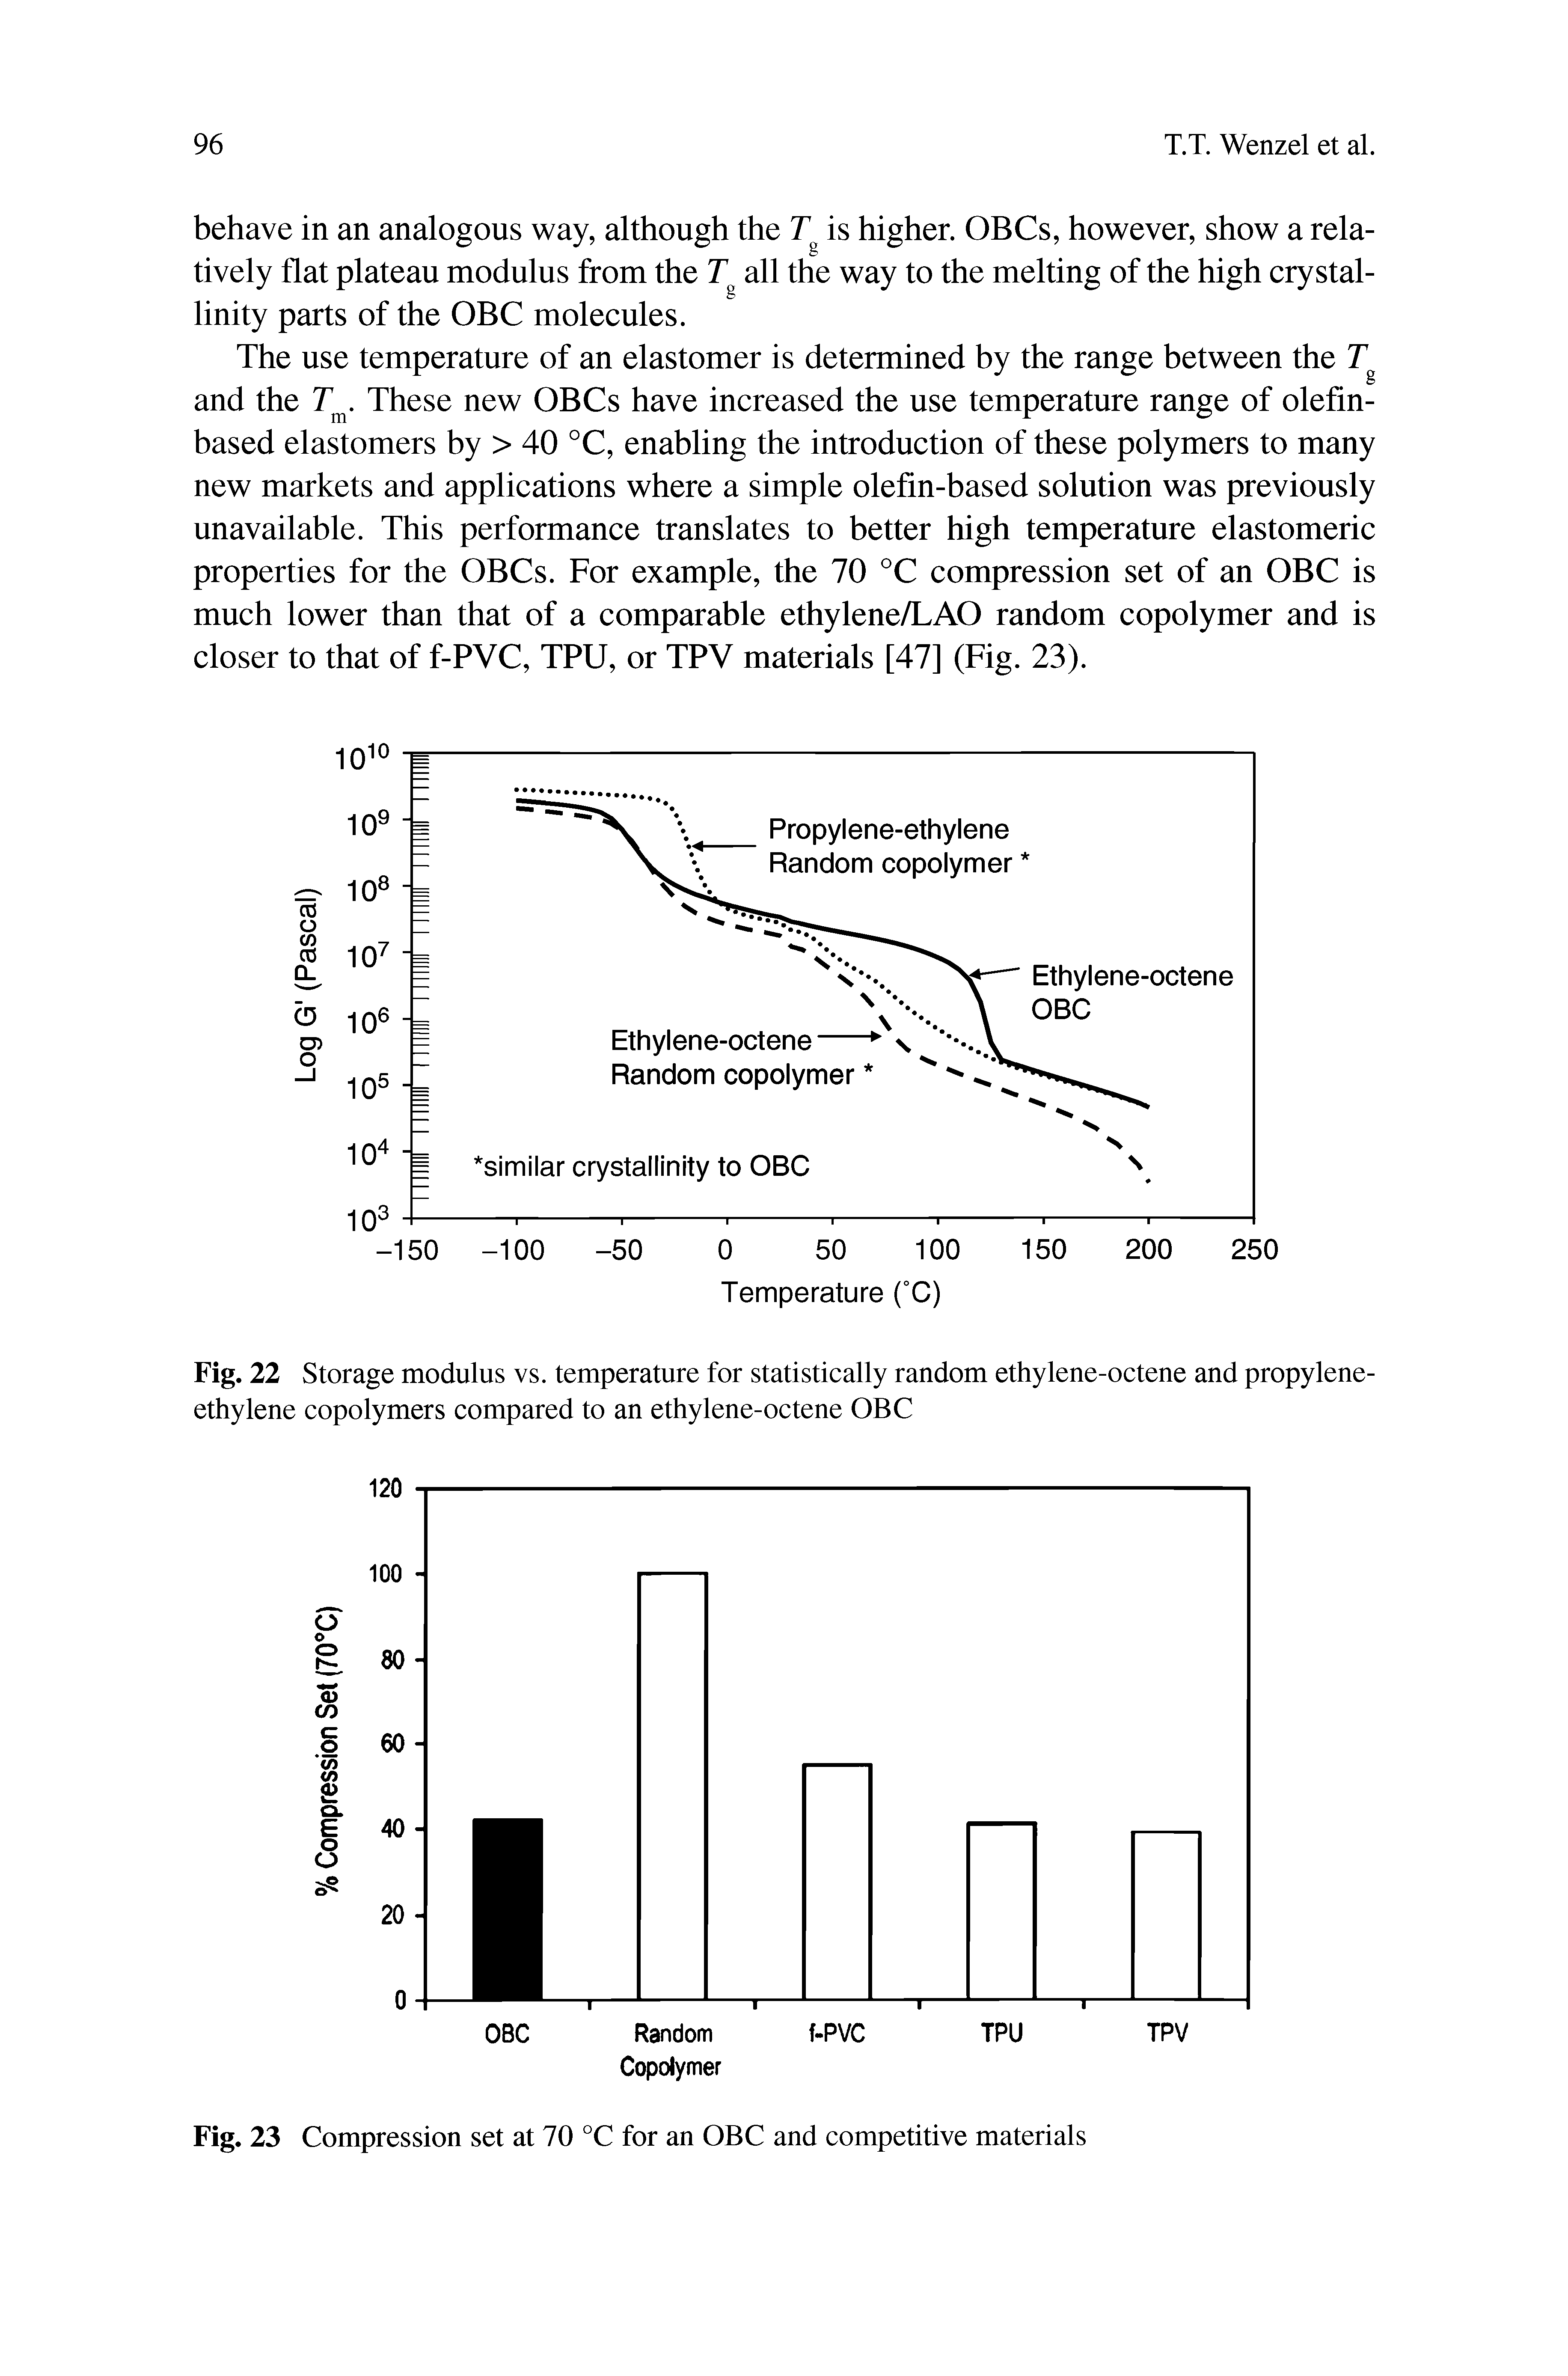 Fig. 22 Storage modulus vs. temperature for statistically random ethylene-octene and propylene-ethylene copolymers compared to an ethylene-octene OBC...